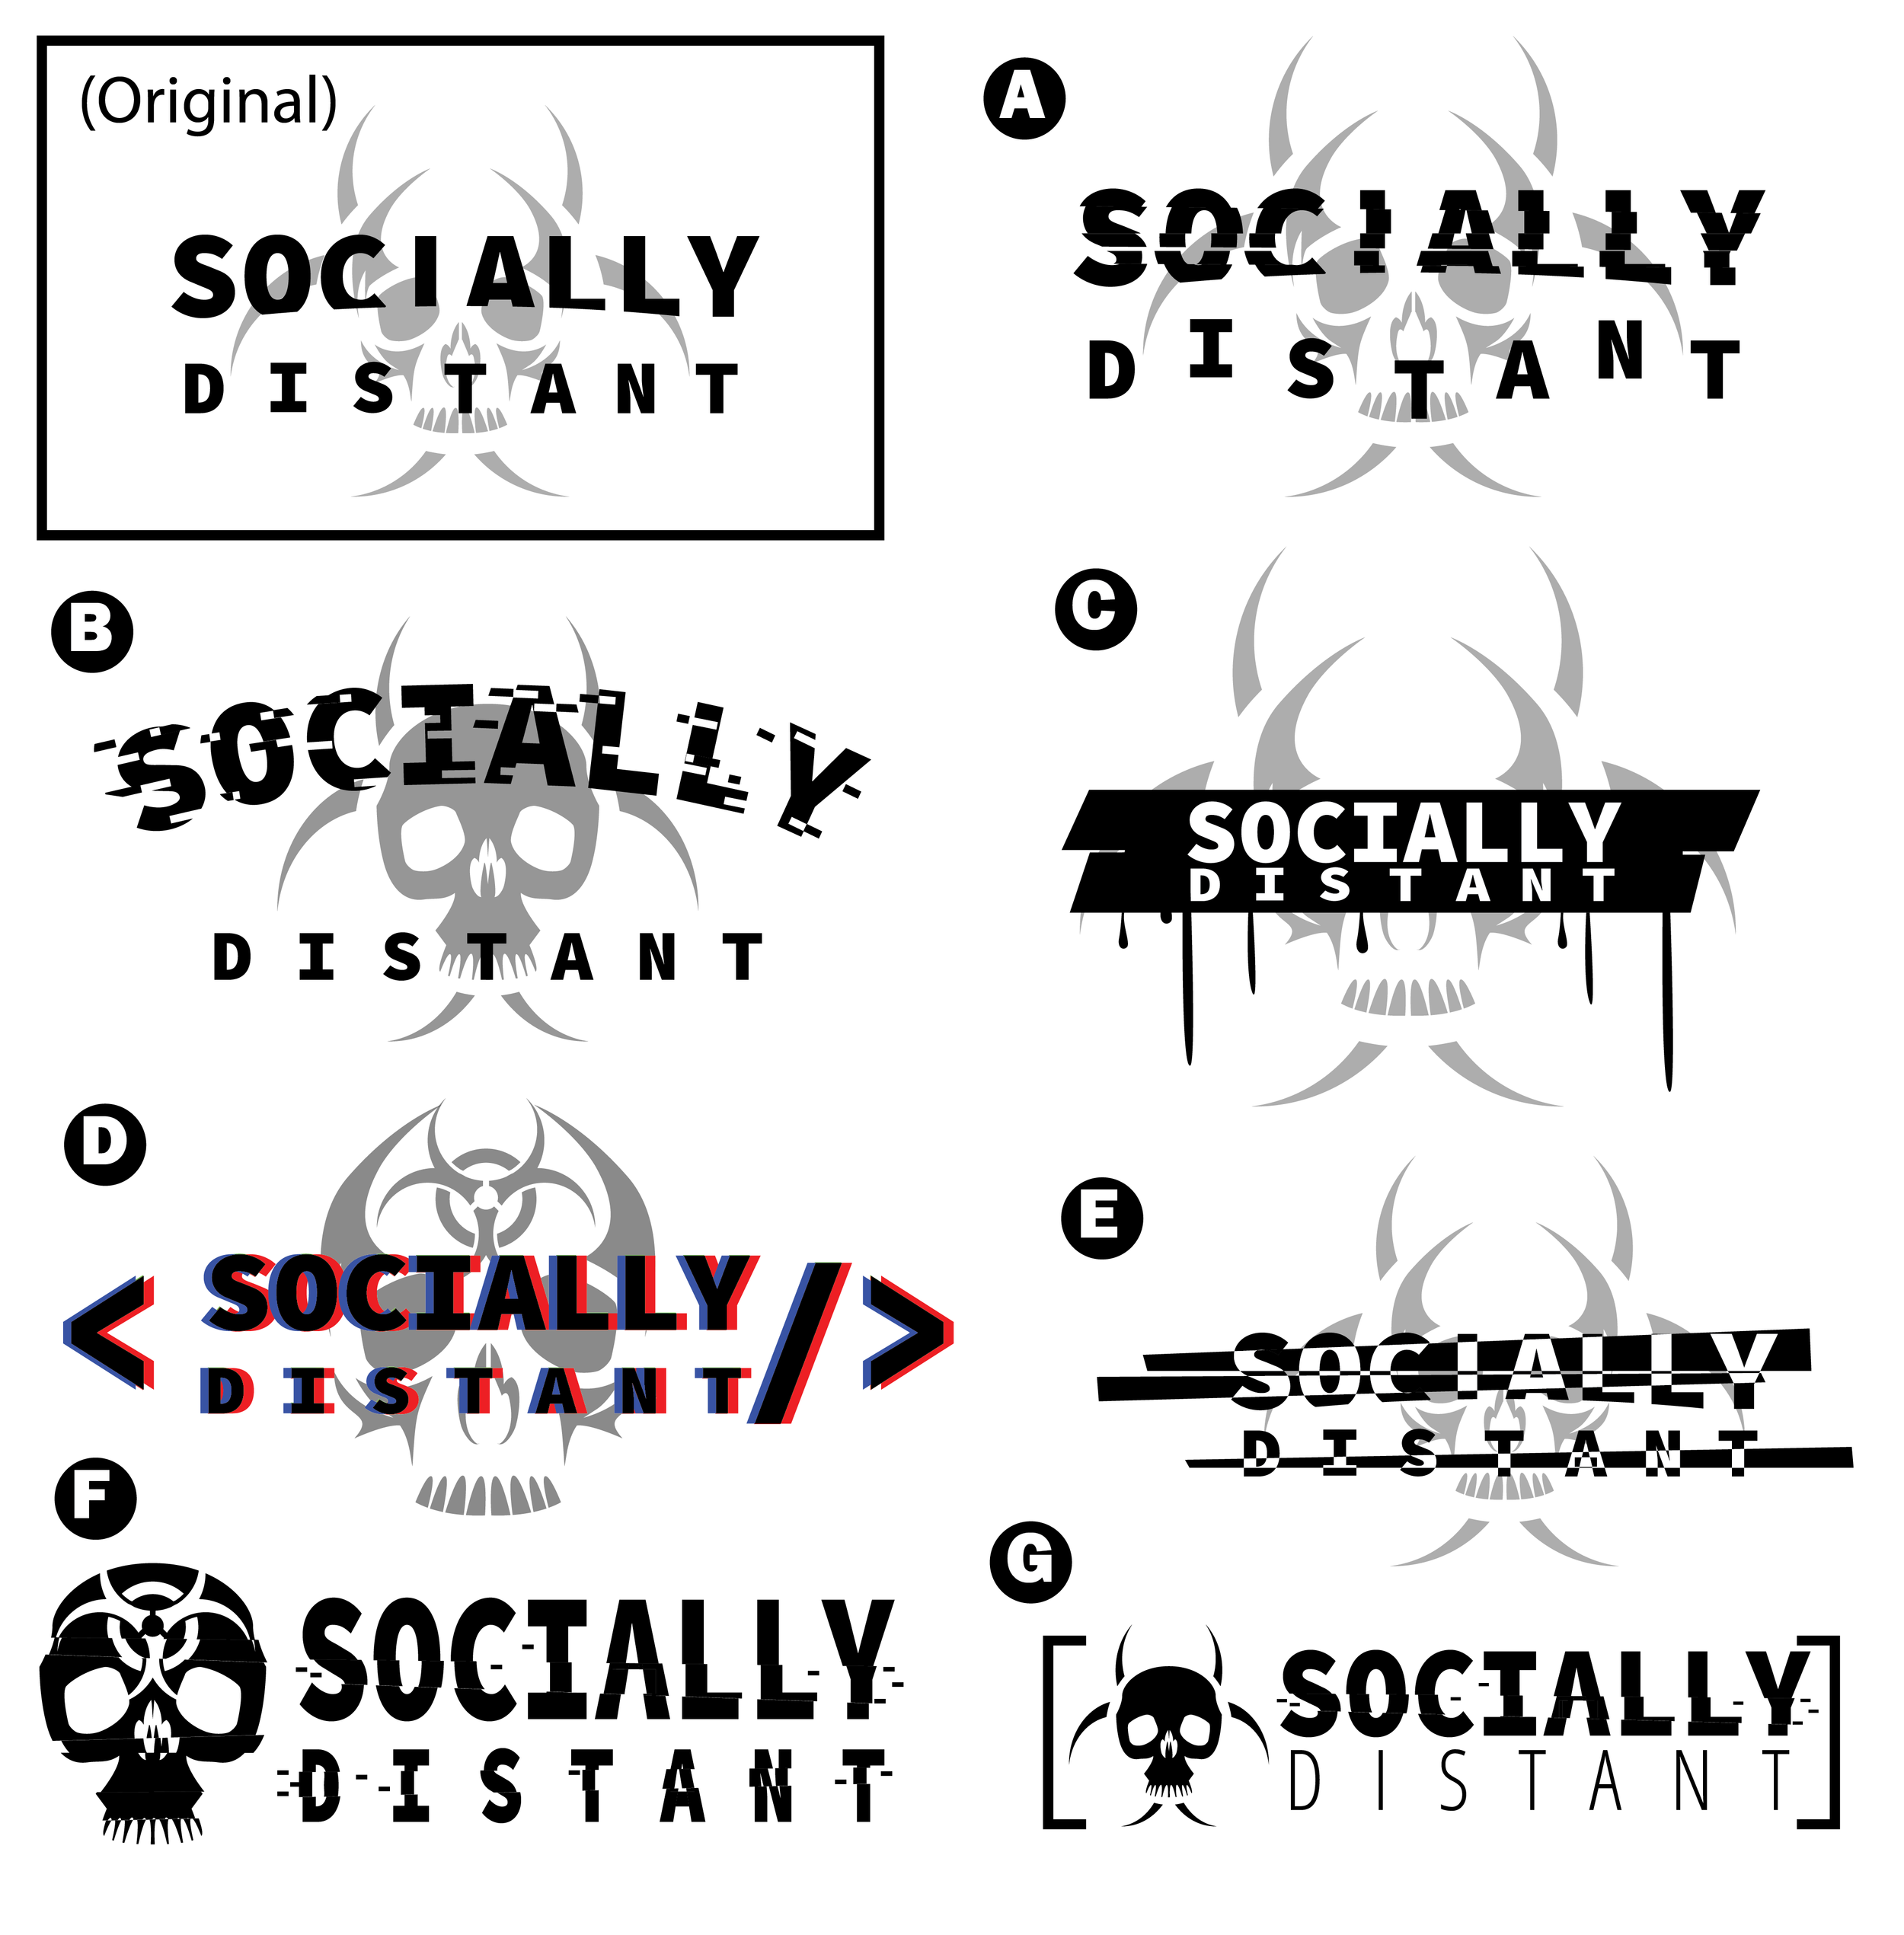 Second batch of logo ideas